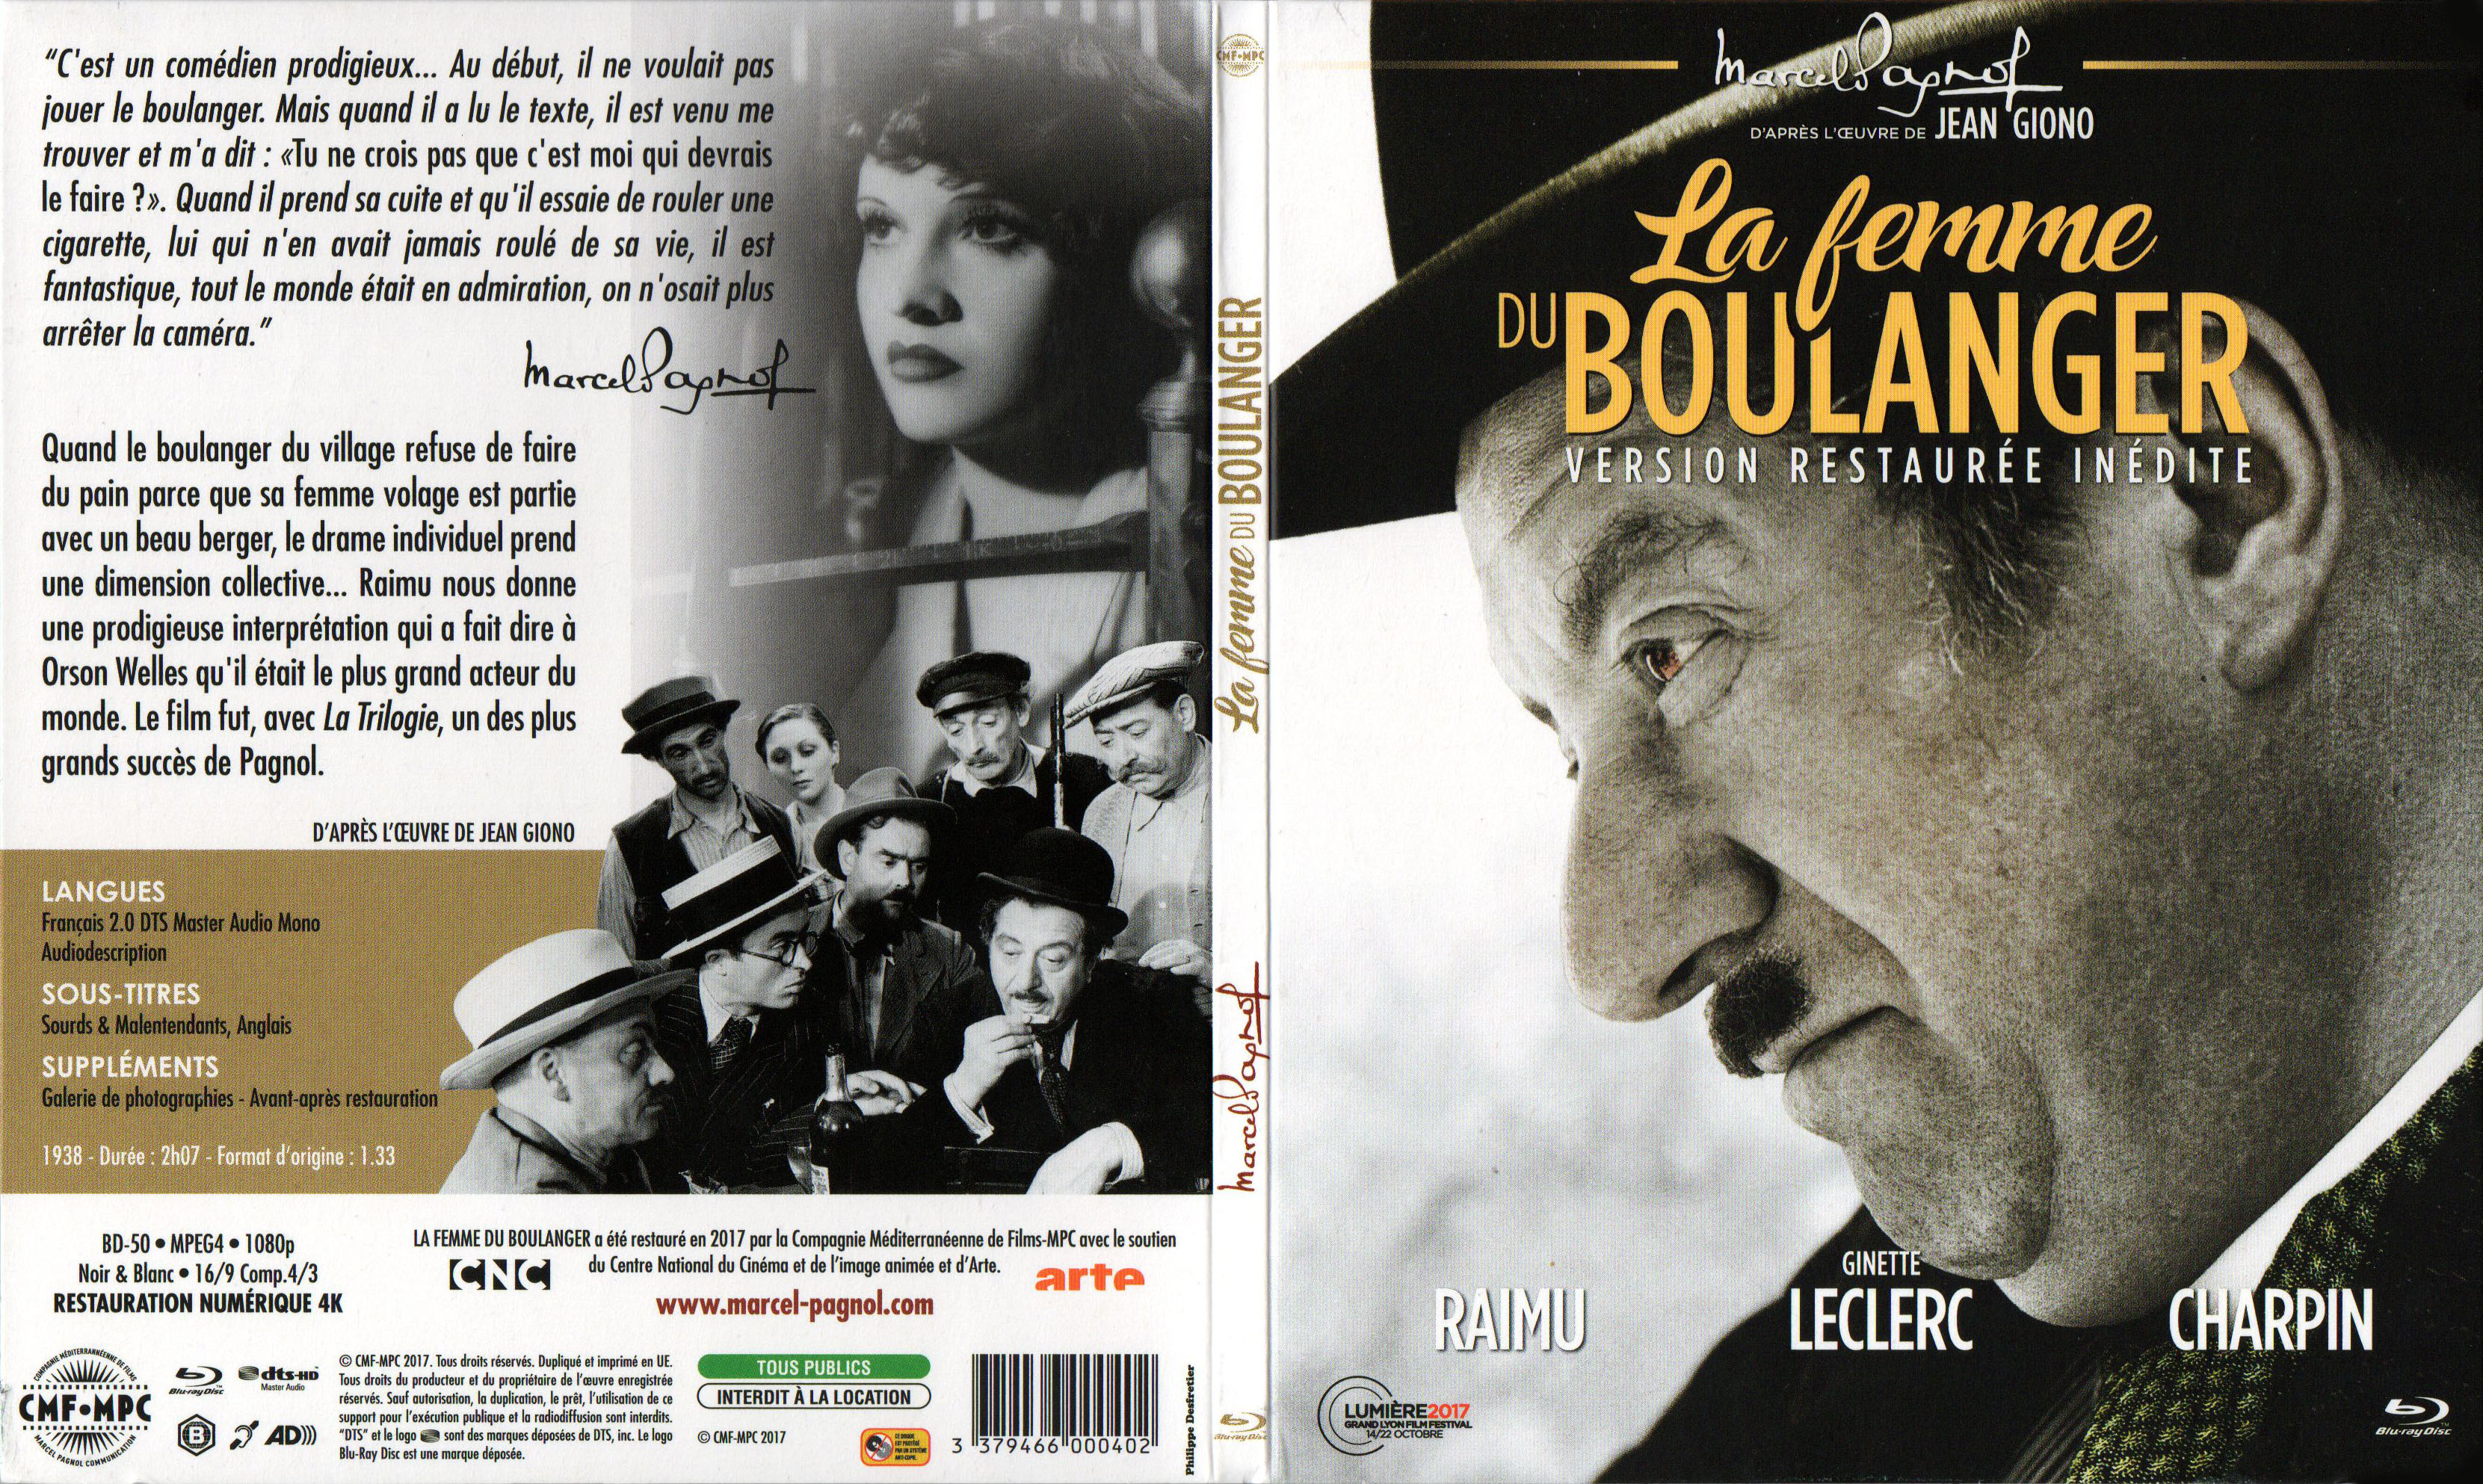 Jaquette DVD La femme du boulanger (BLU-RAY)